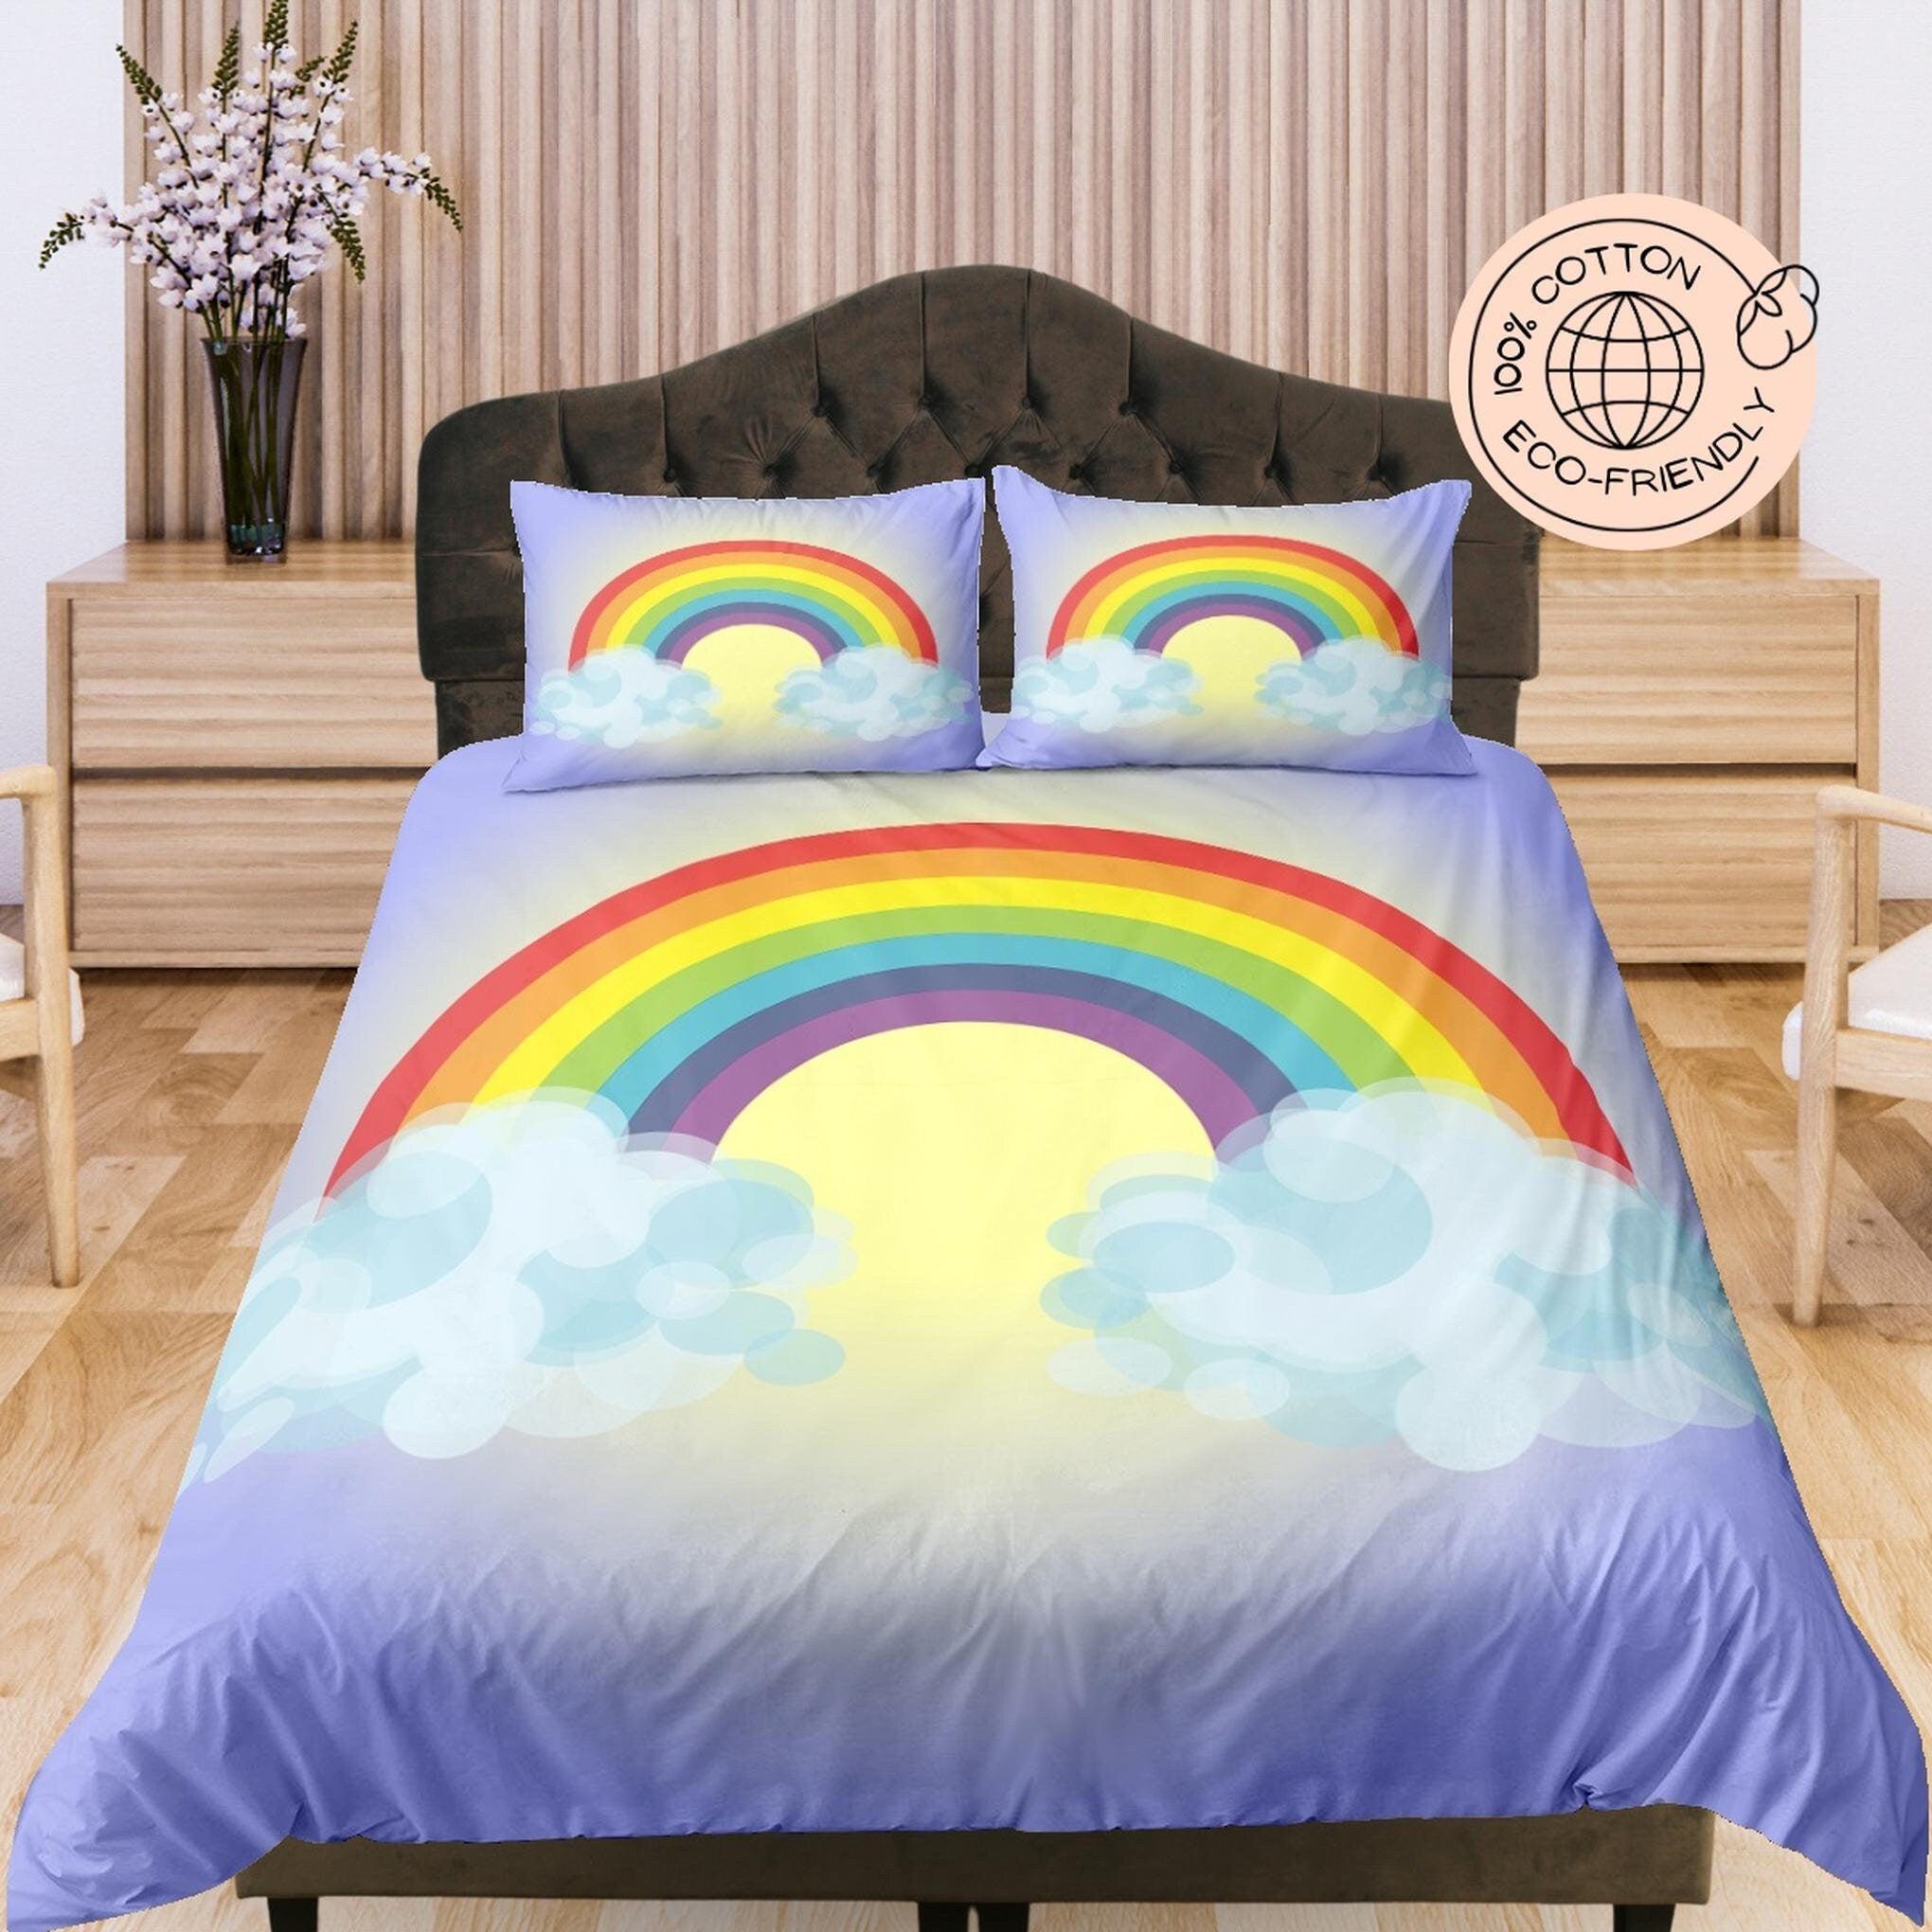 daintyduvet Rainbow Cotton Duvet Cover Set for Kids, Purple and Yellow Toddler Bedding, Baby Zipper Bedding, Nursery Bedding, Crib Blanket, Unisex